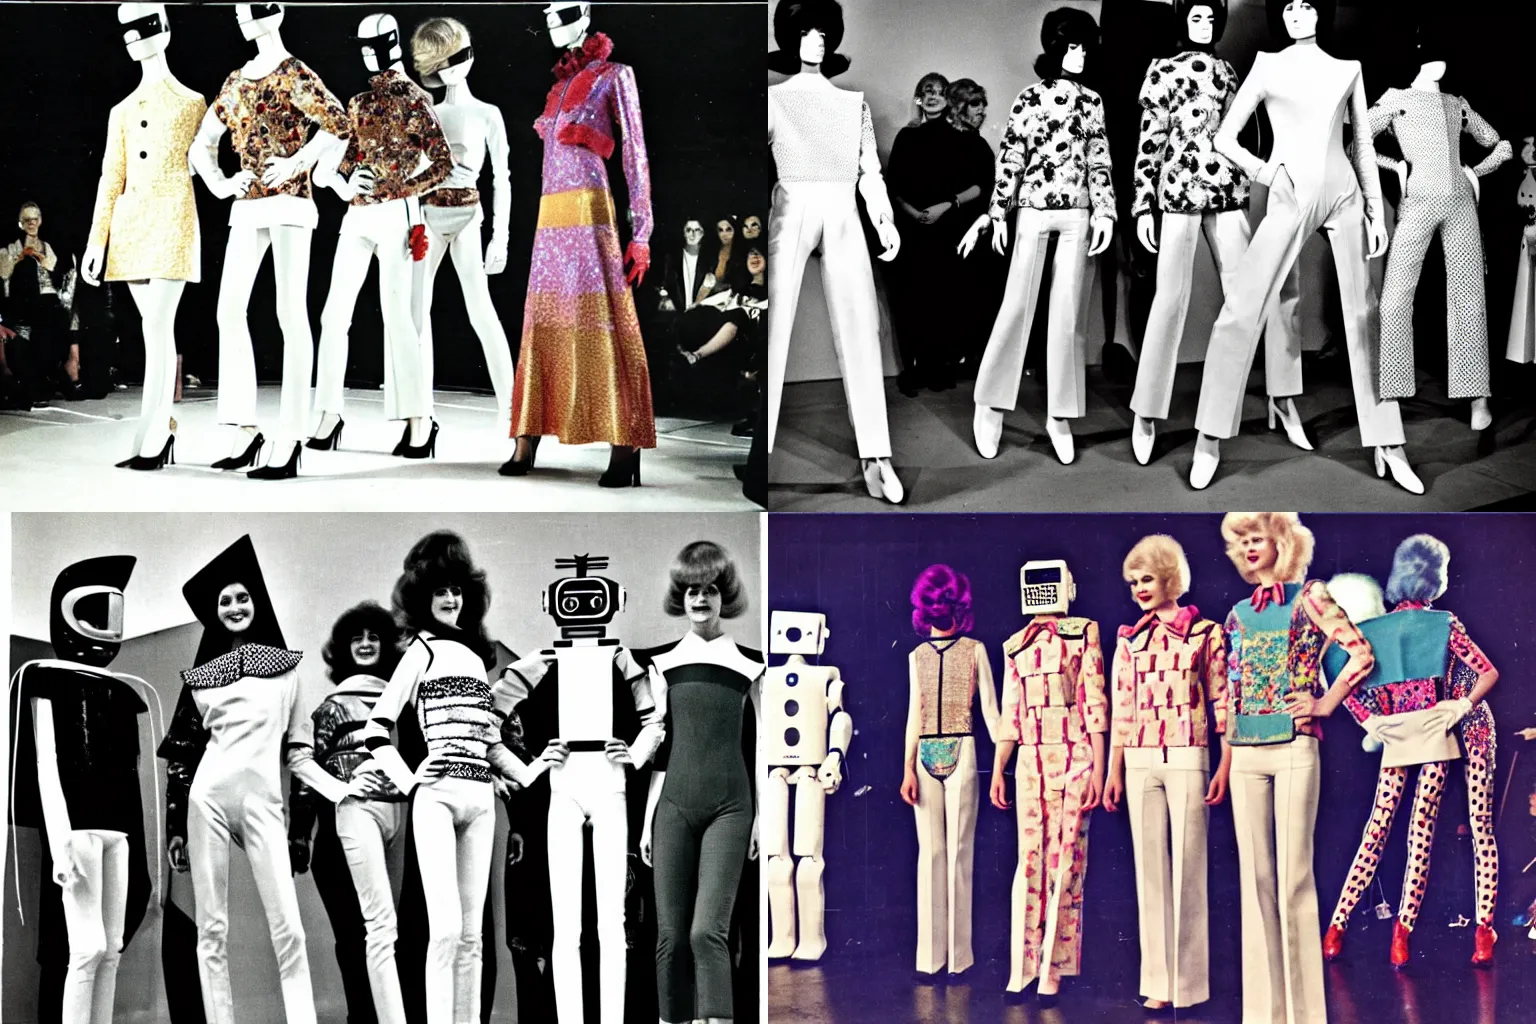 Prompt: robot fashion show, vintage couture seventies fashion